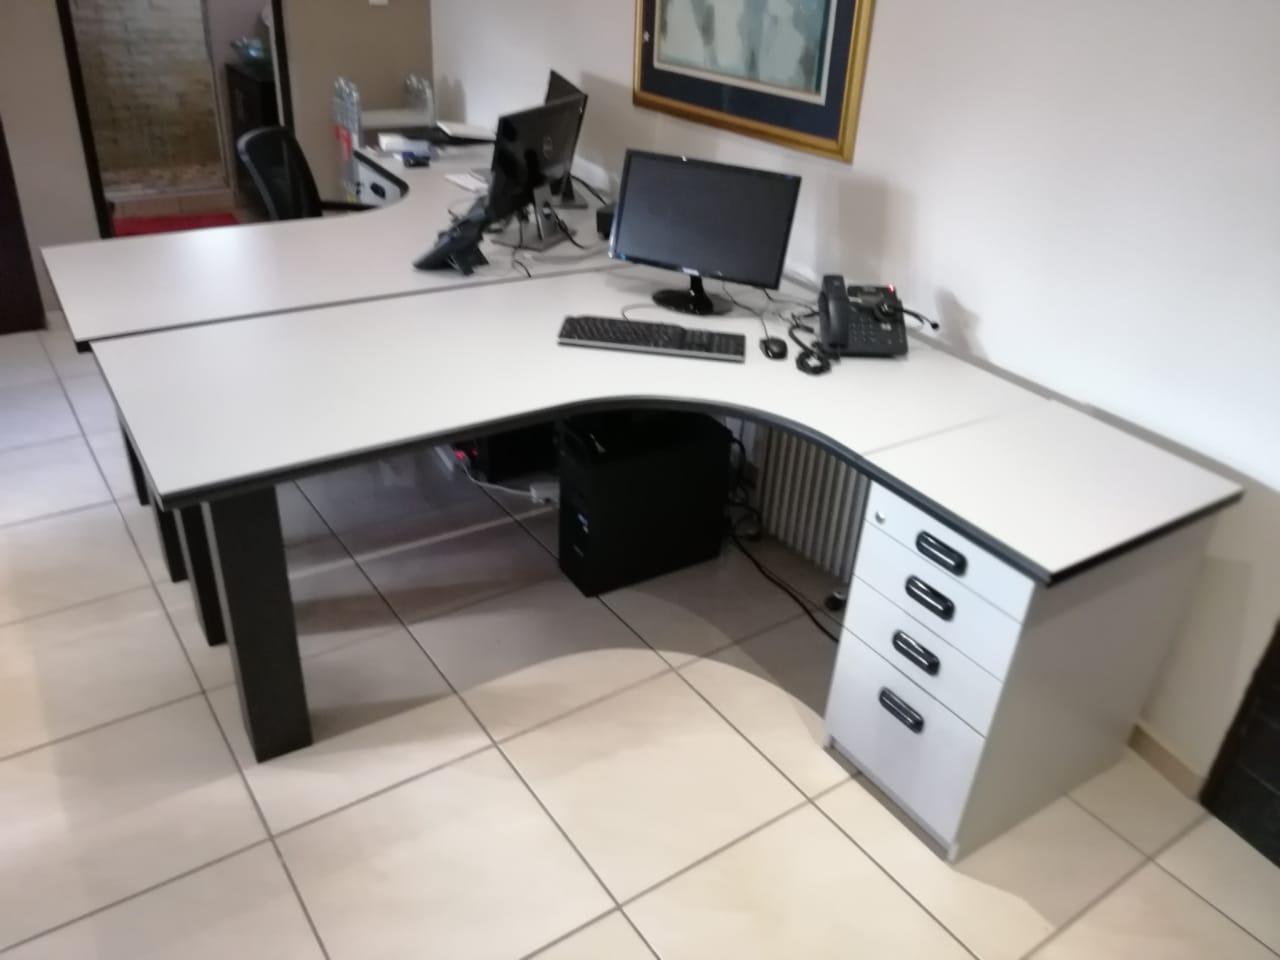 3 X Office Desks For Sale Junk Mail